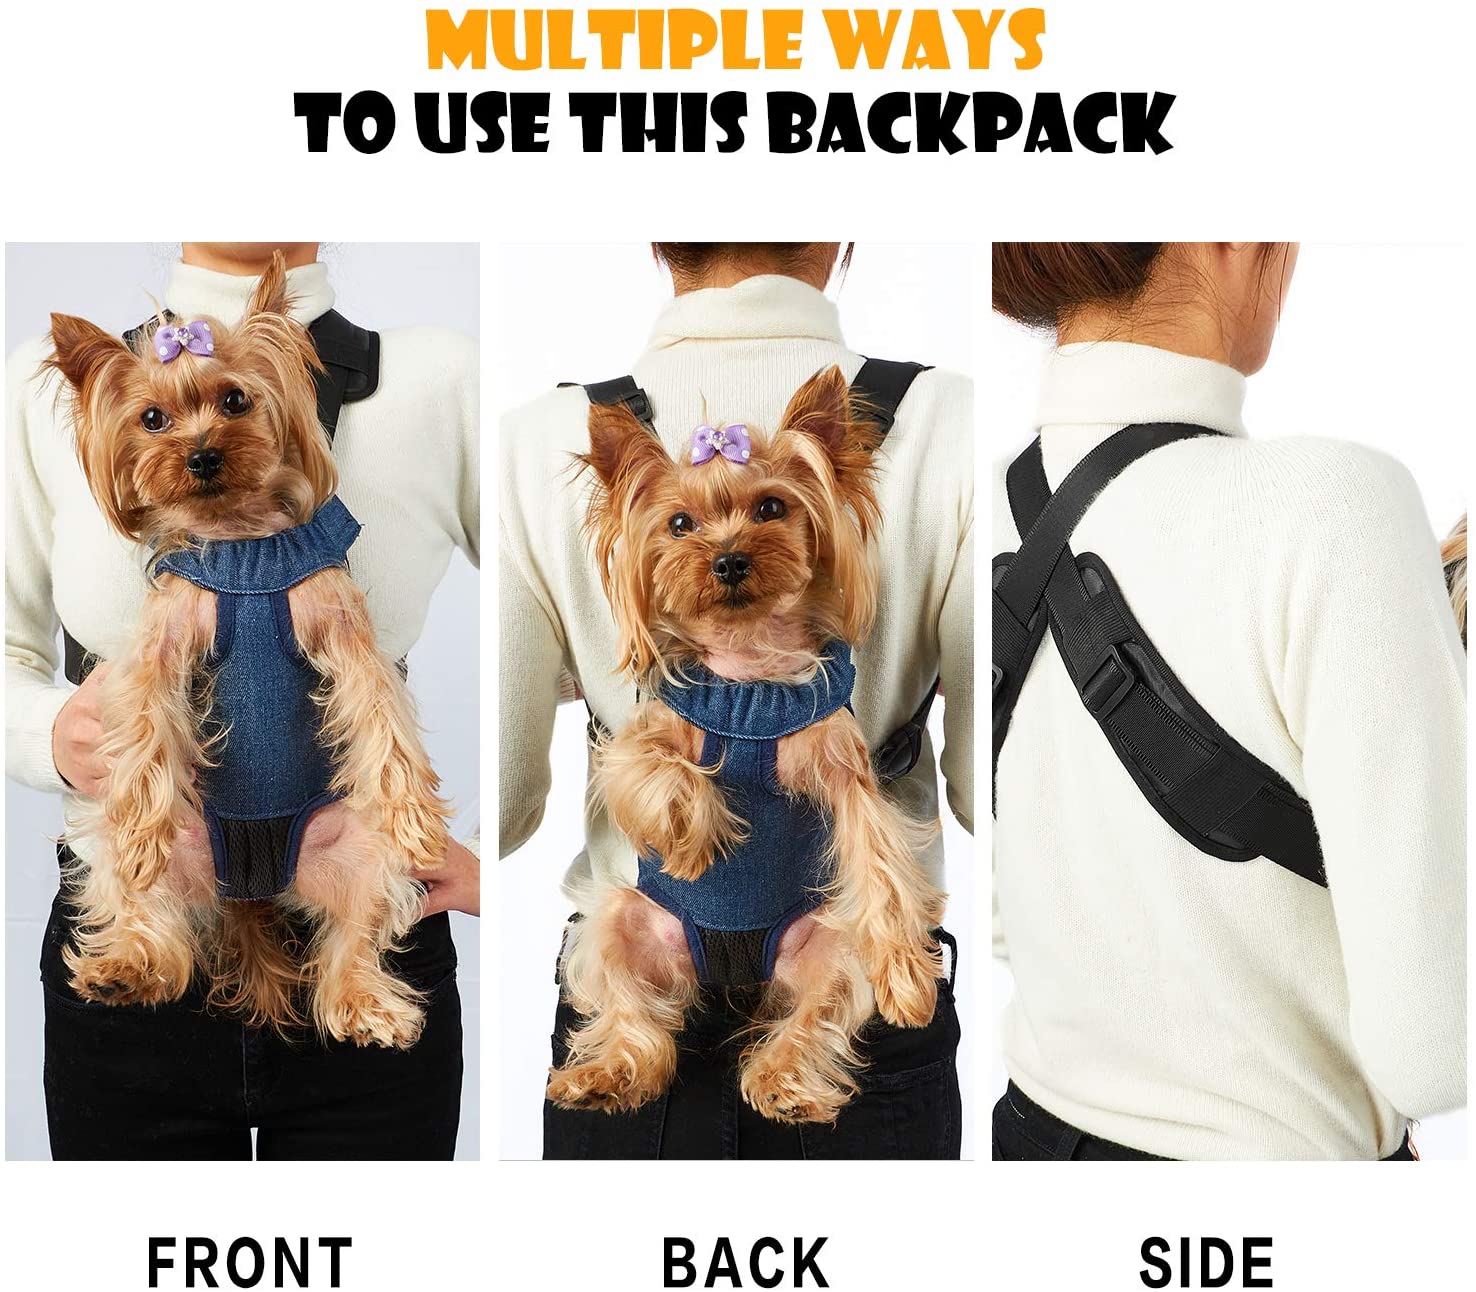 Pet Carrier Backpack